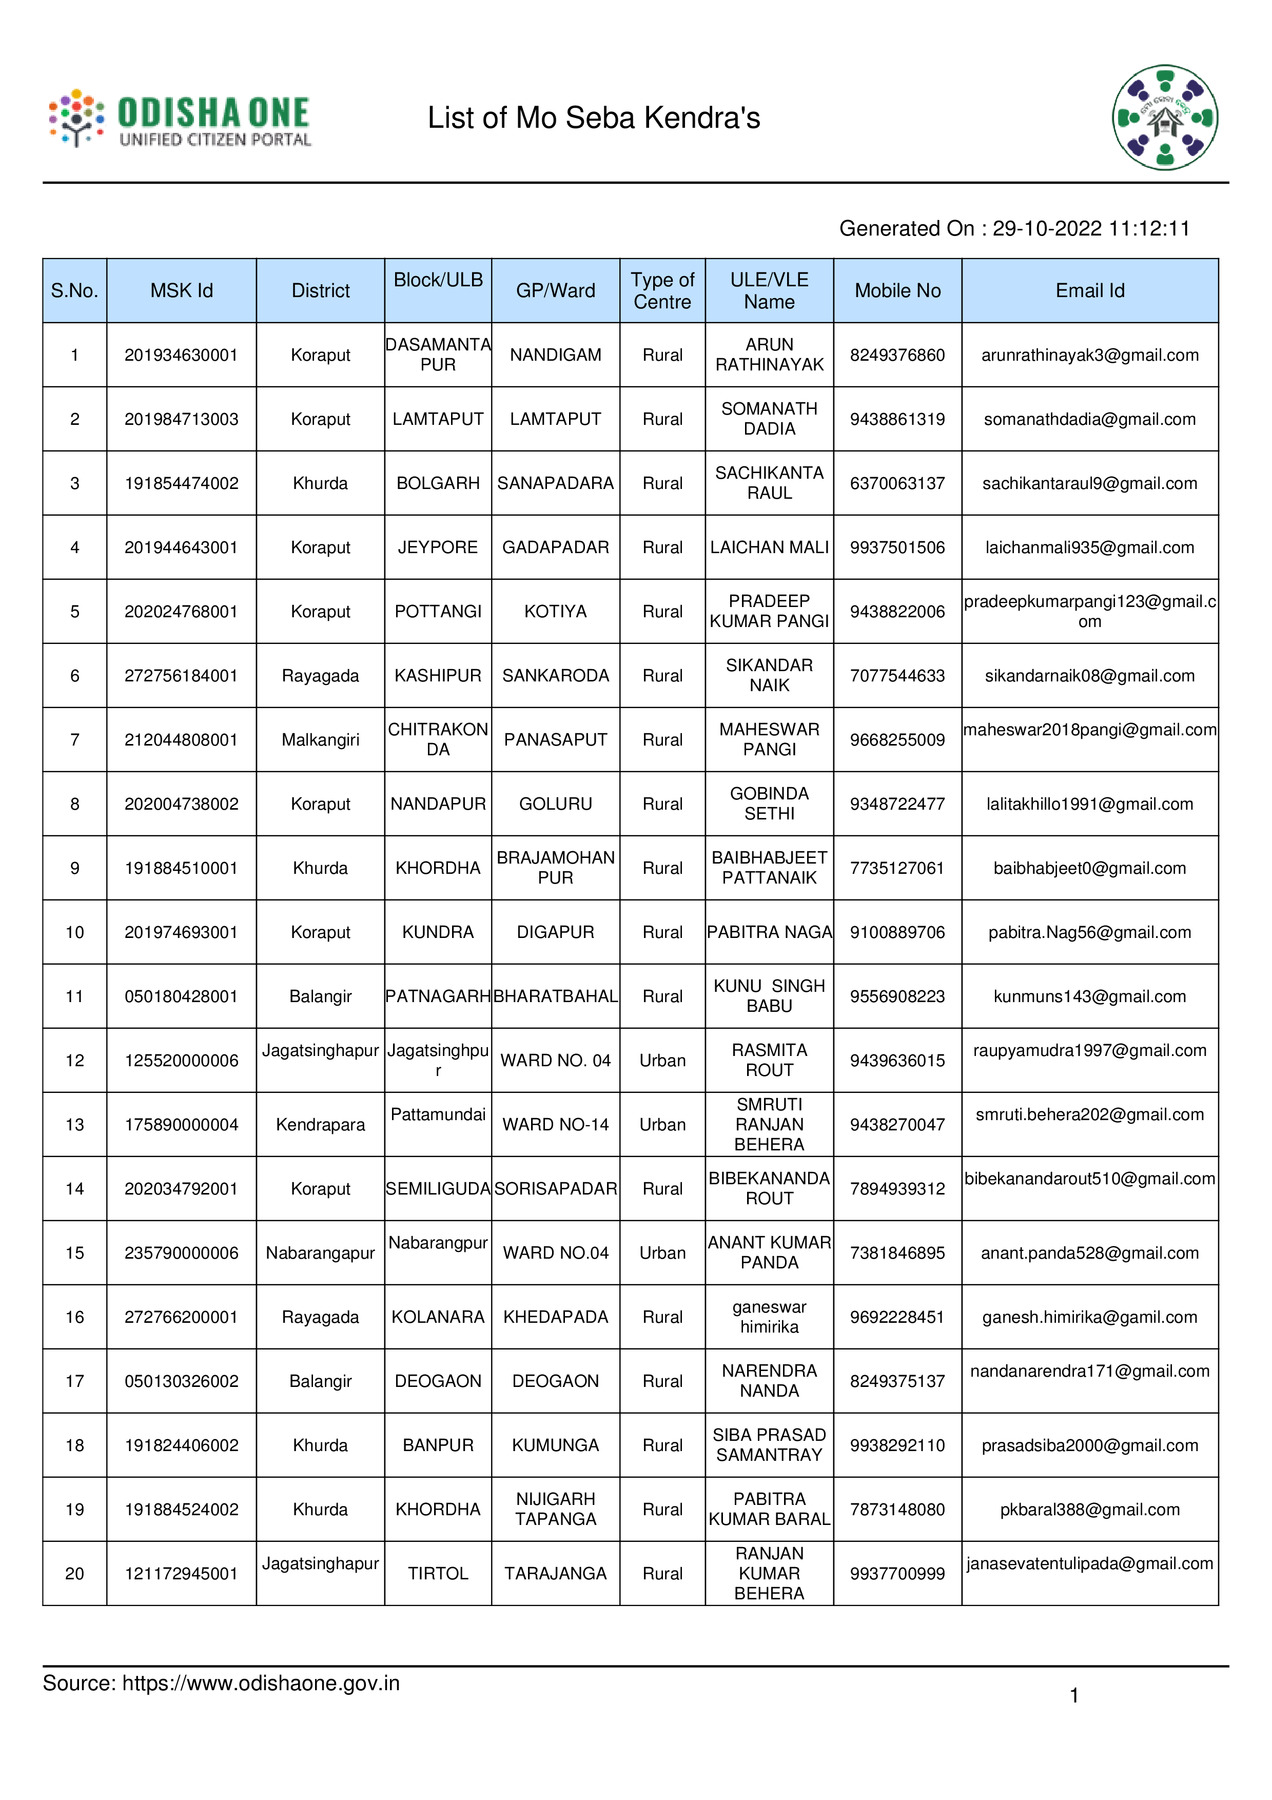 Odisha Mo Seva Kendra (MSK) List 2022 PDF